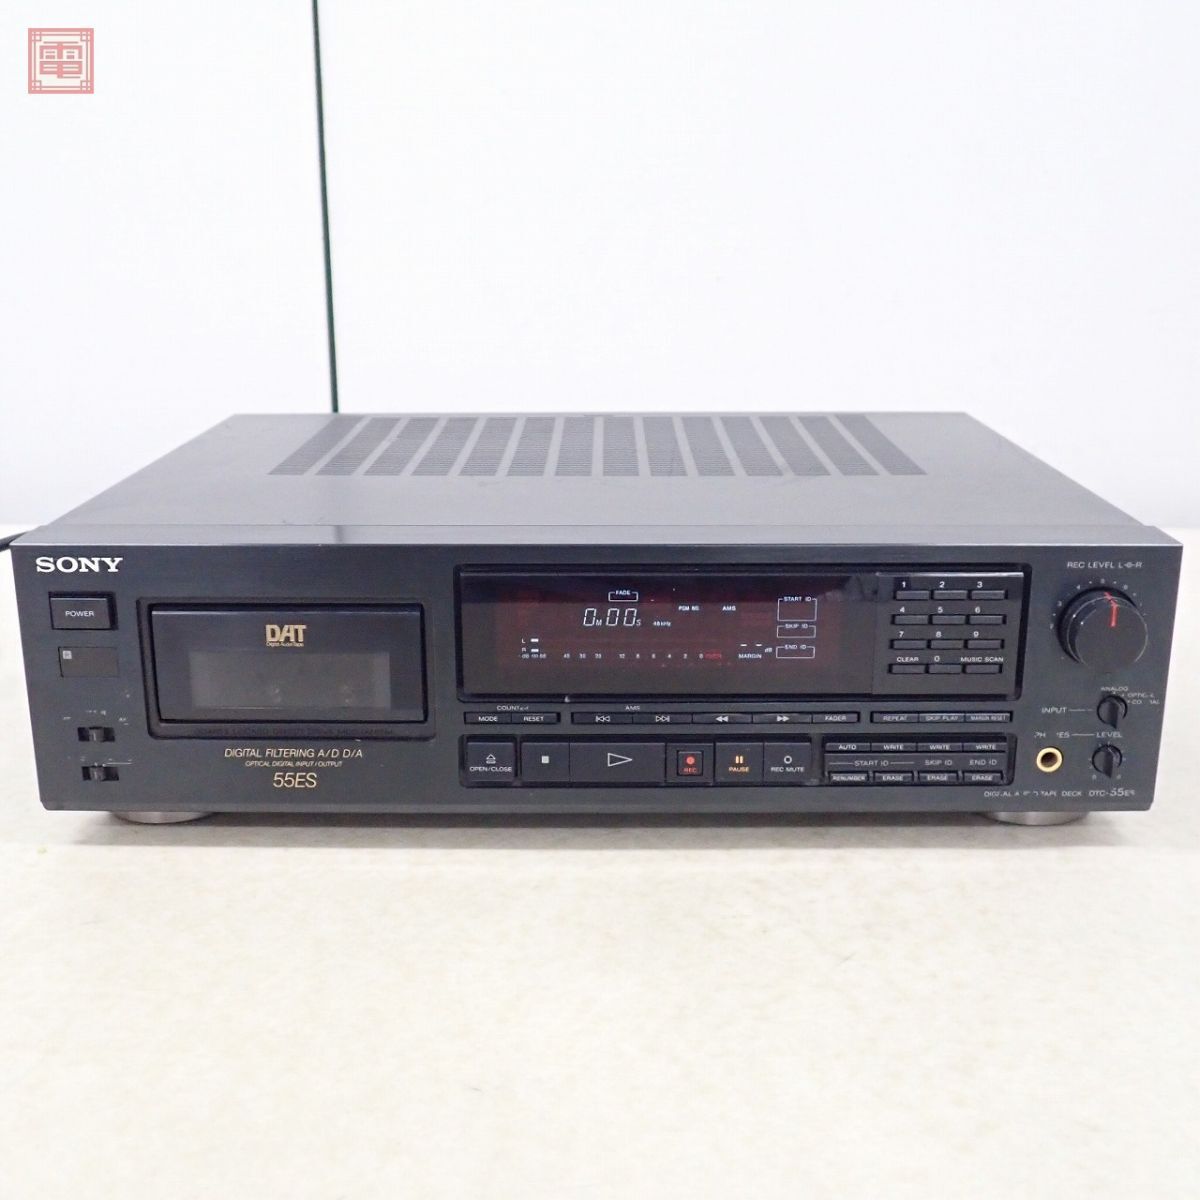  Sony DTC-55ES DAT deck digital audio tape deck SONY present condition goods [40